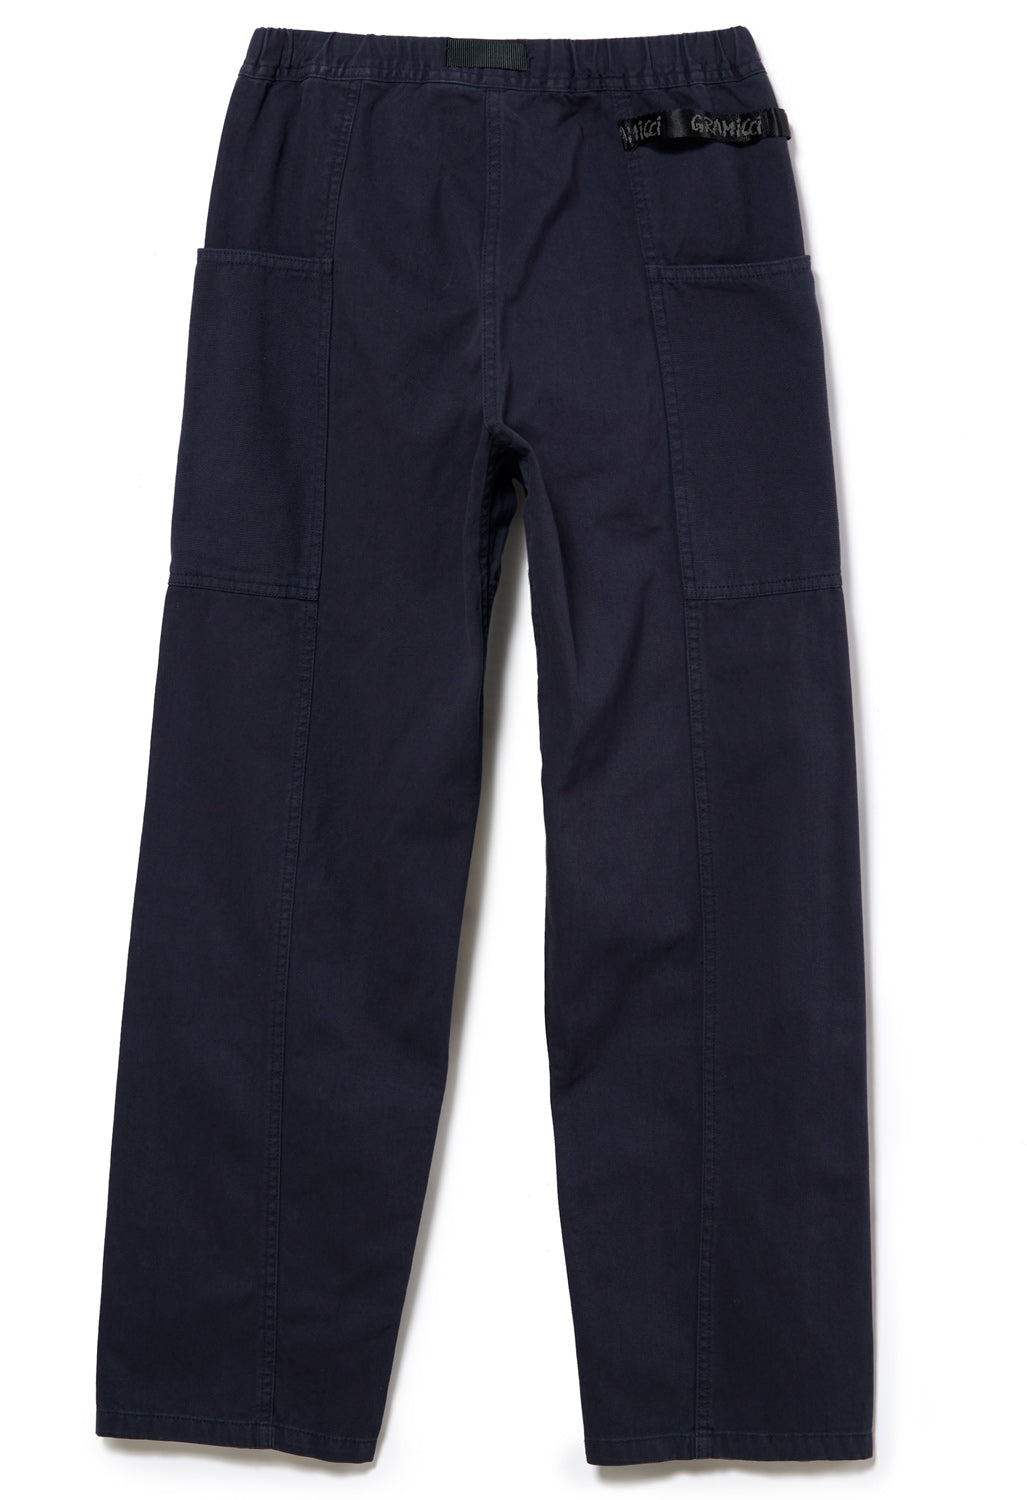 Gramicci Men's Gadget Pants - Double Navy